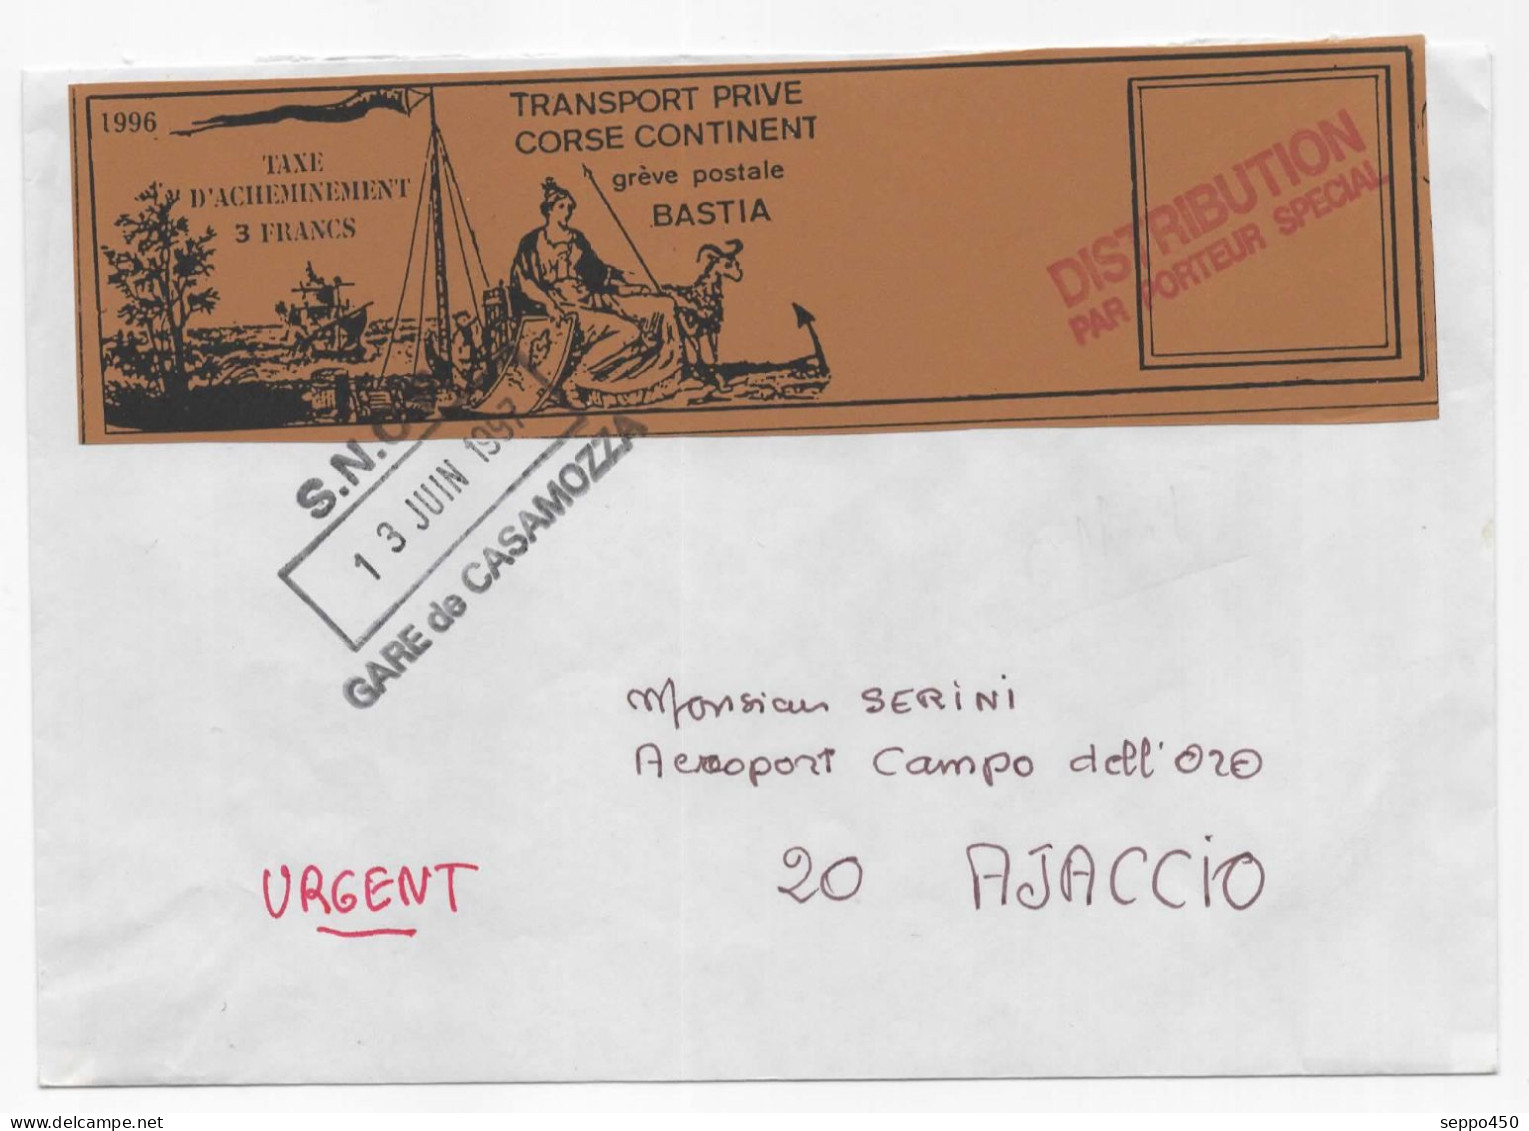 VIGNETTE TRANSPORT PRIVE BASTIA  AJACCIO PORTEUR SPECIAL 1997 GARE CASAMOZZA GREVE POSTALE LETTRE COVER - Stamps